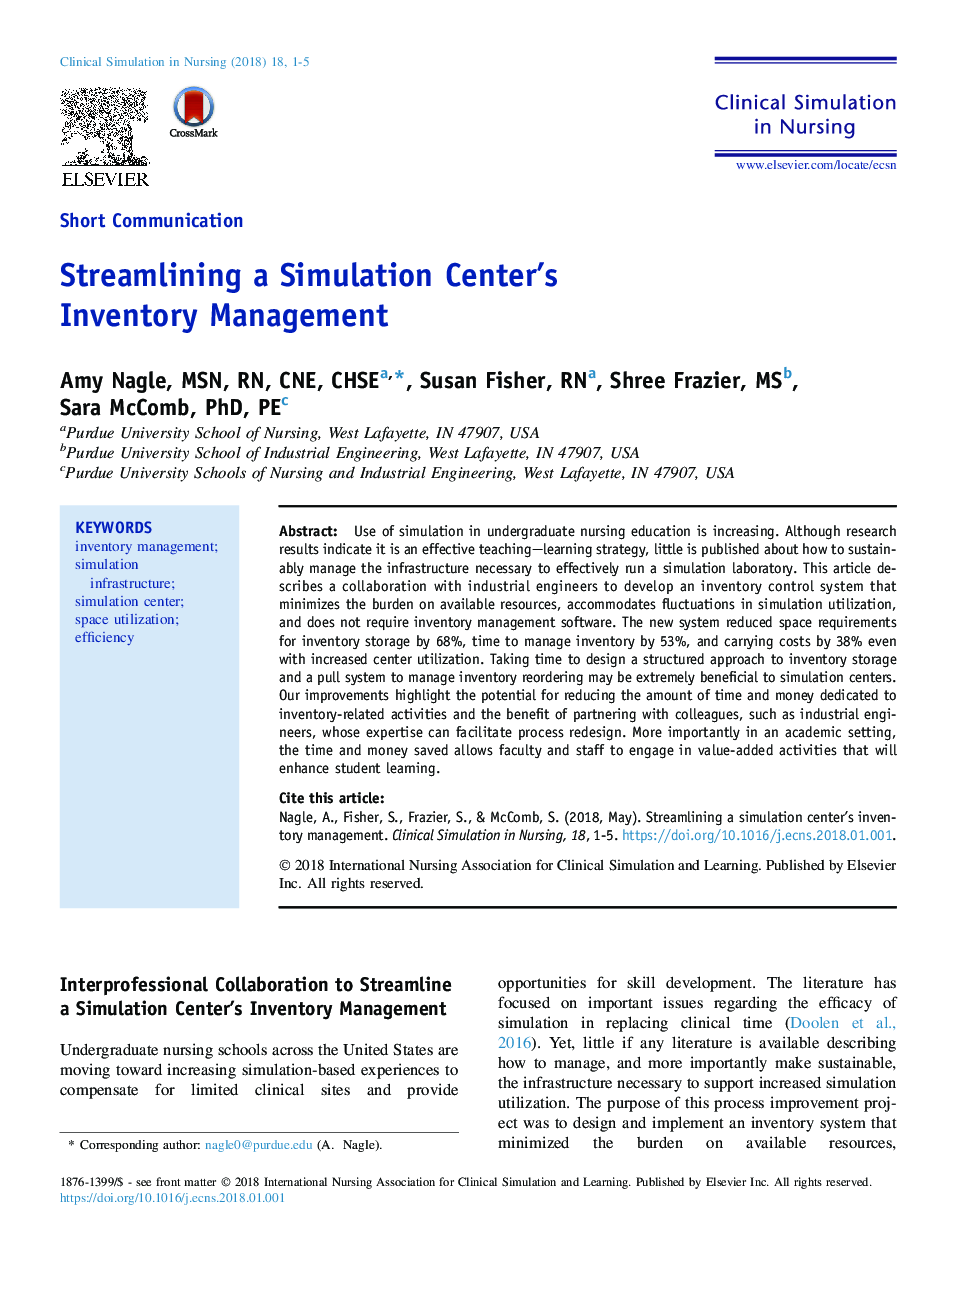 Streamlining a Simulation Center's Inventory Management